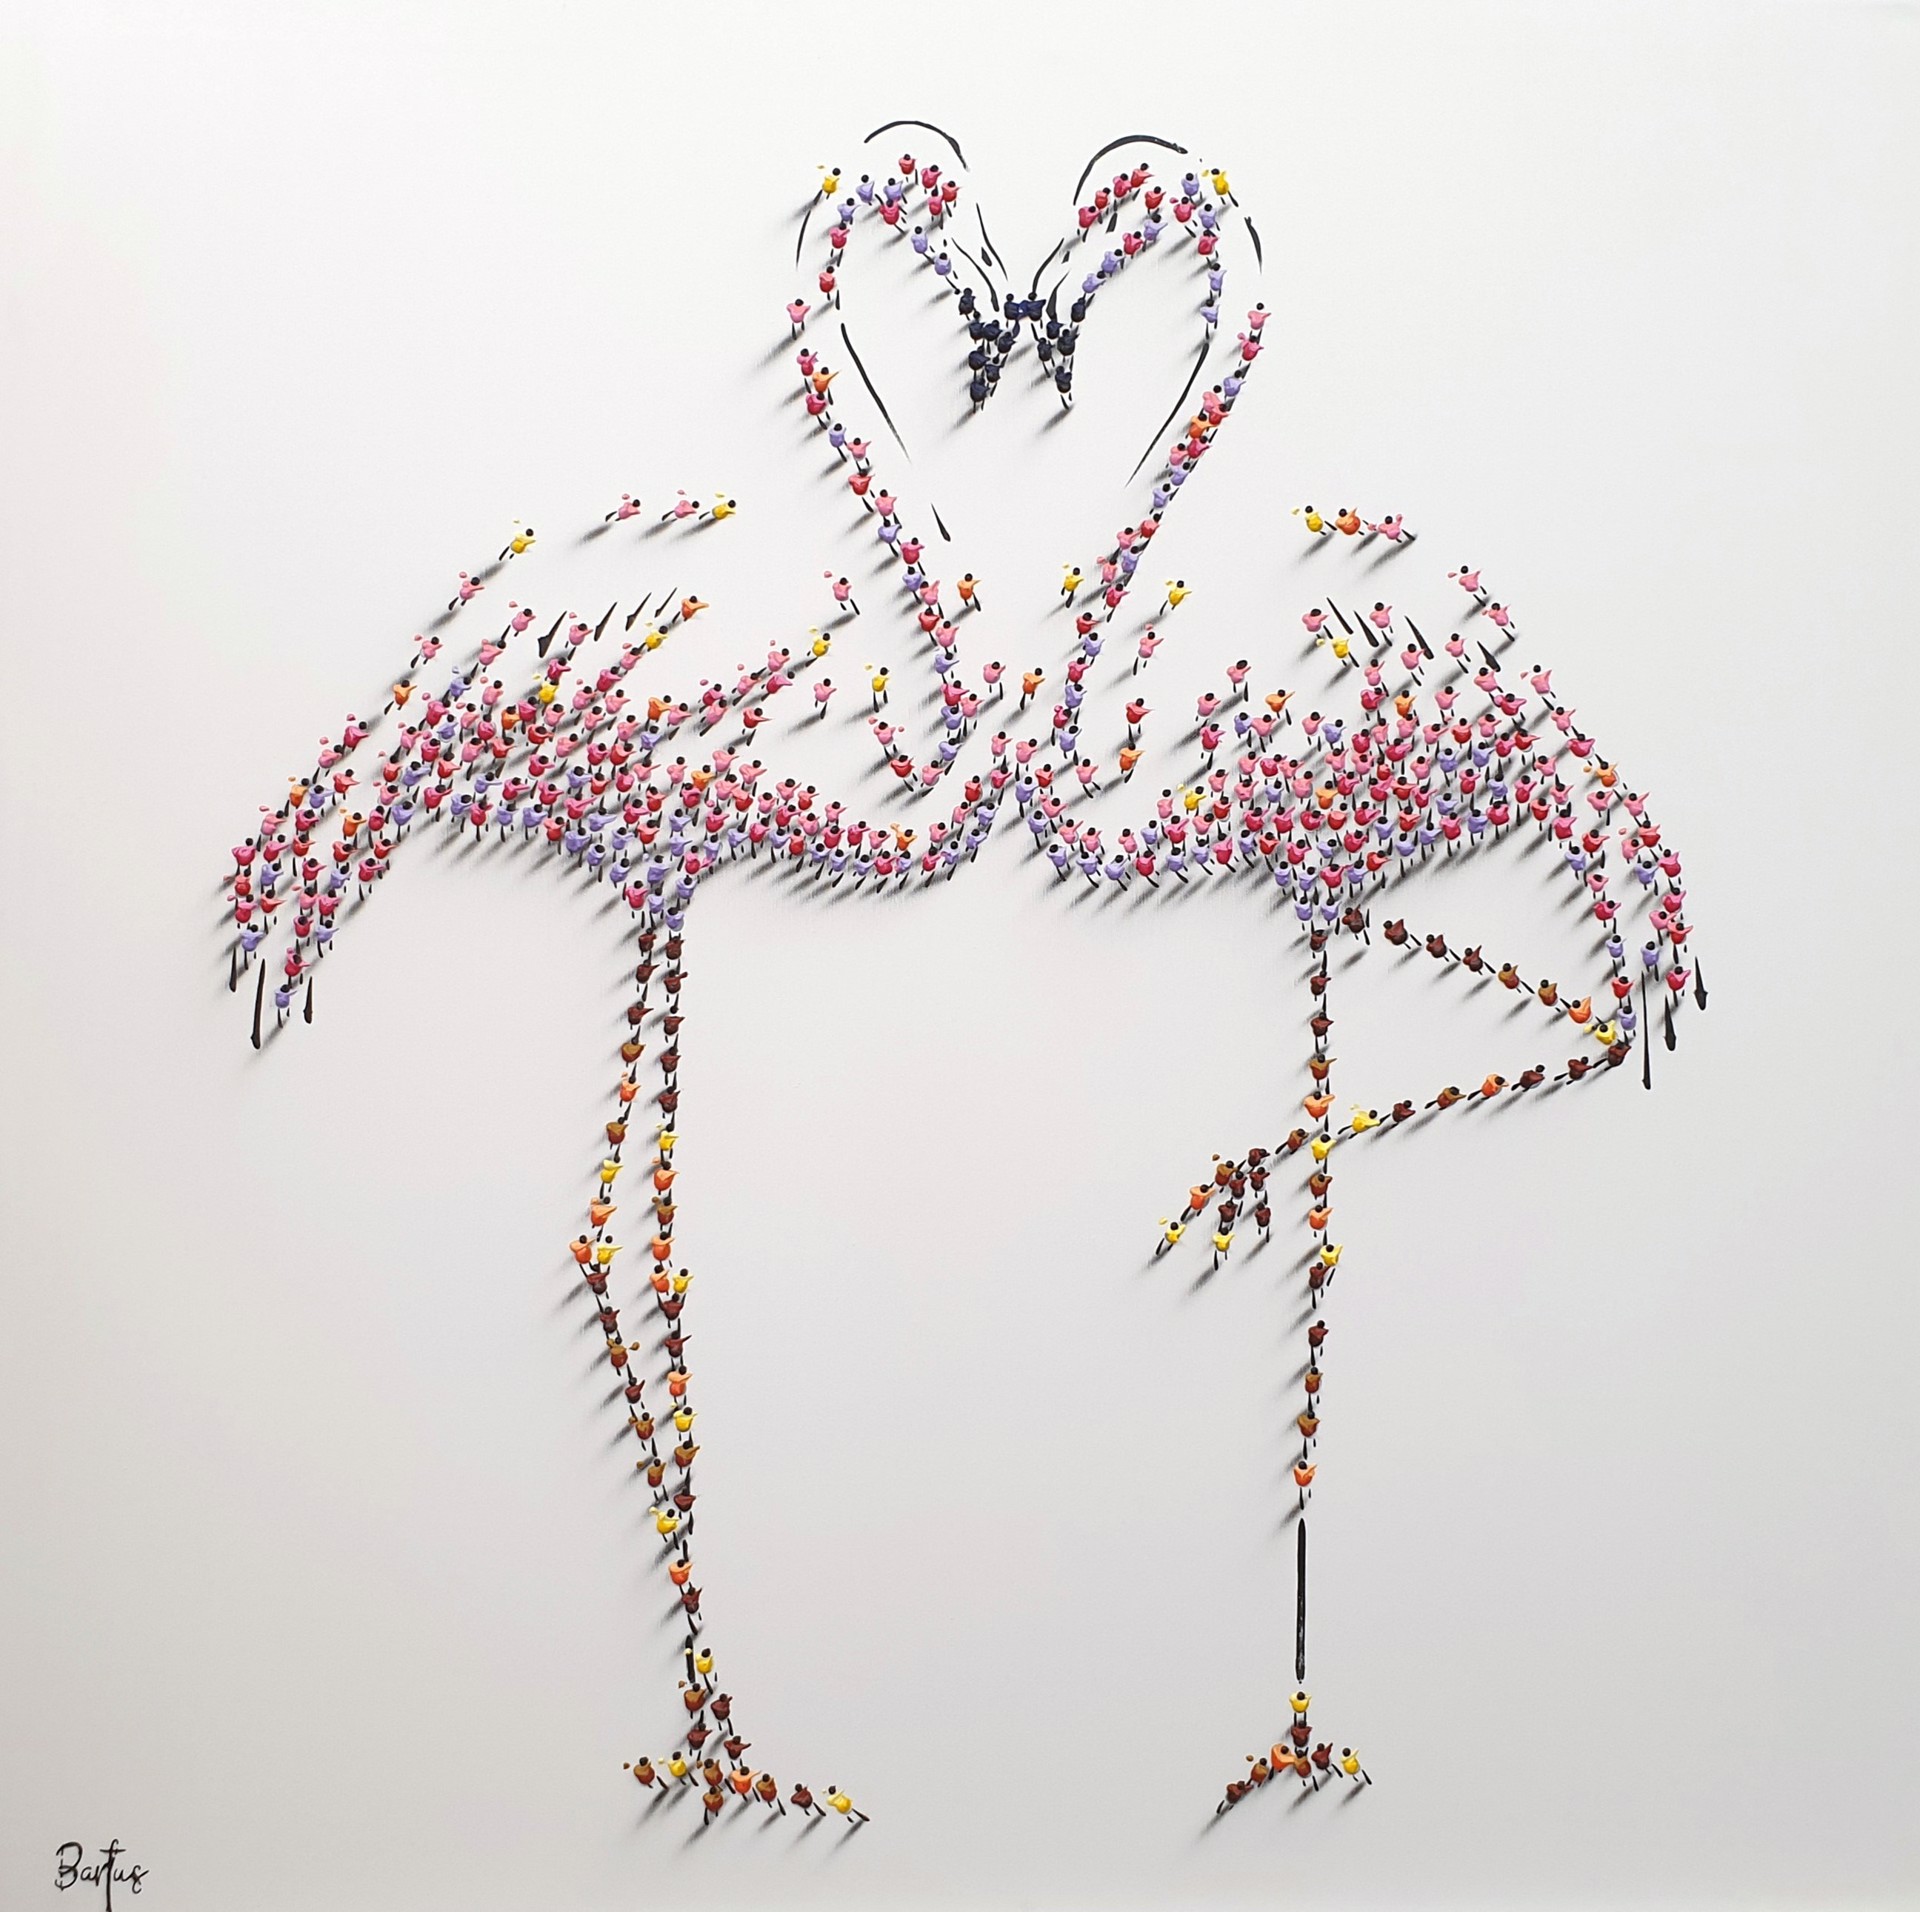 Flamingos by Francisco Bartus